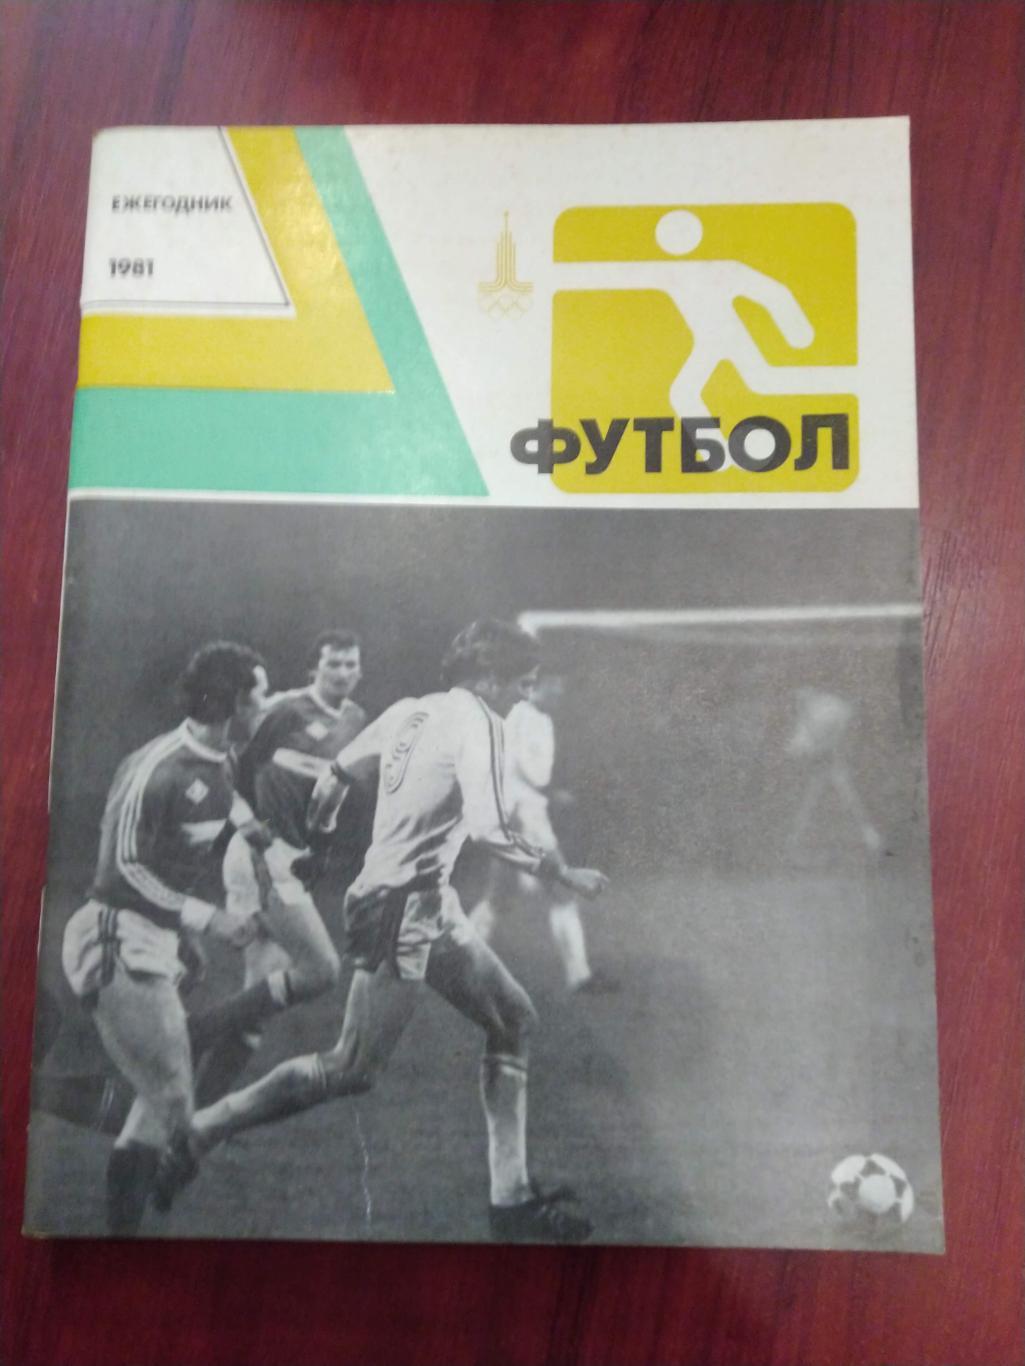 Футбол ежегодник 1981